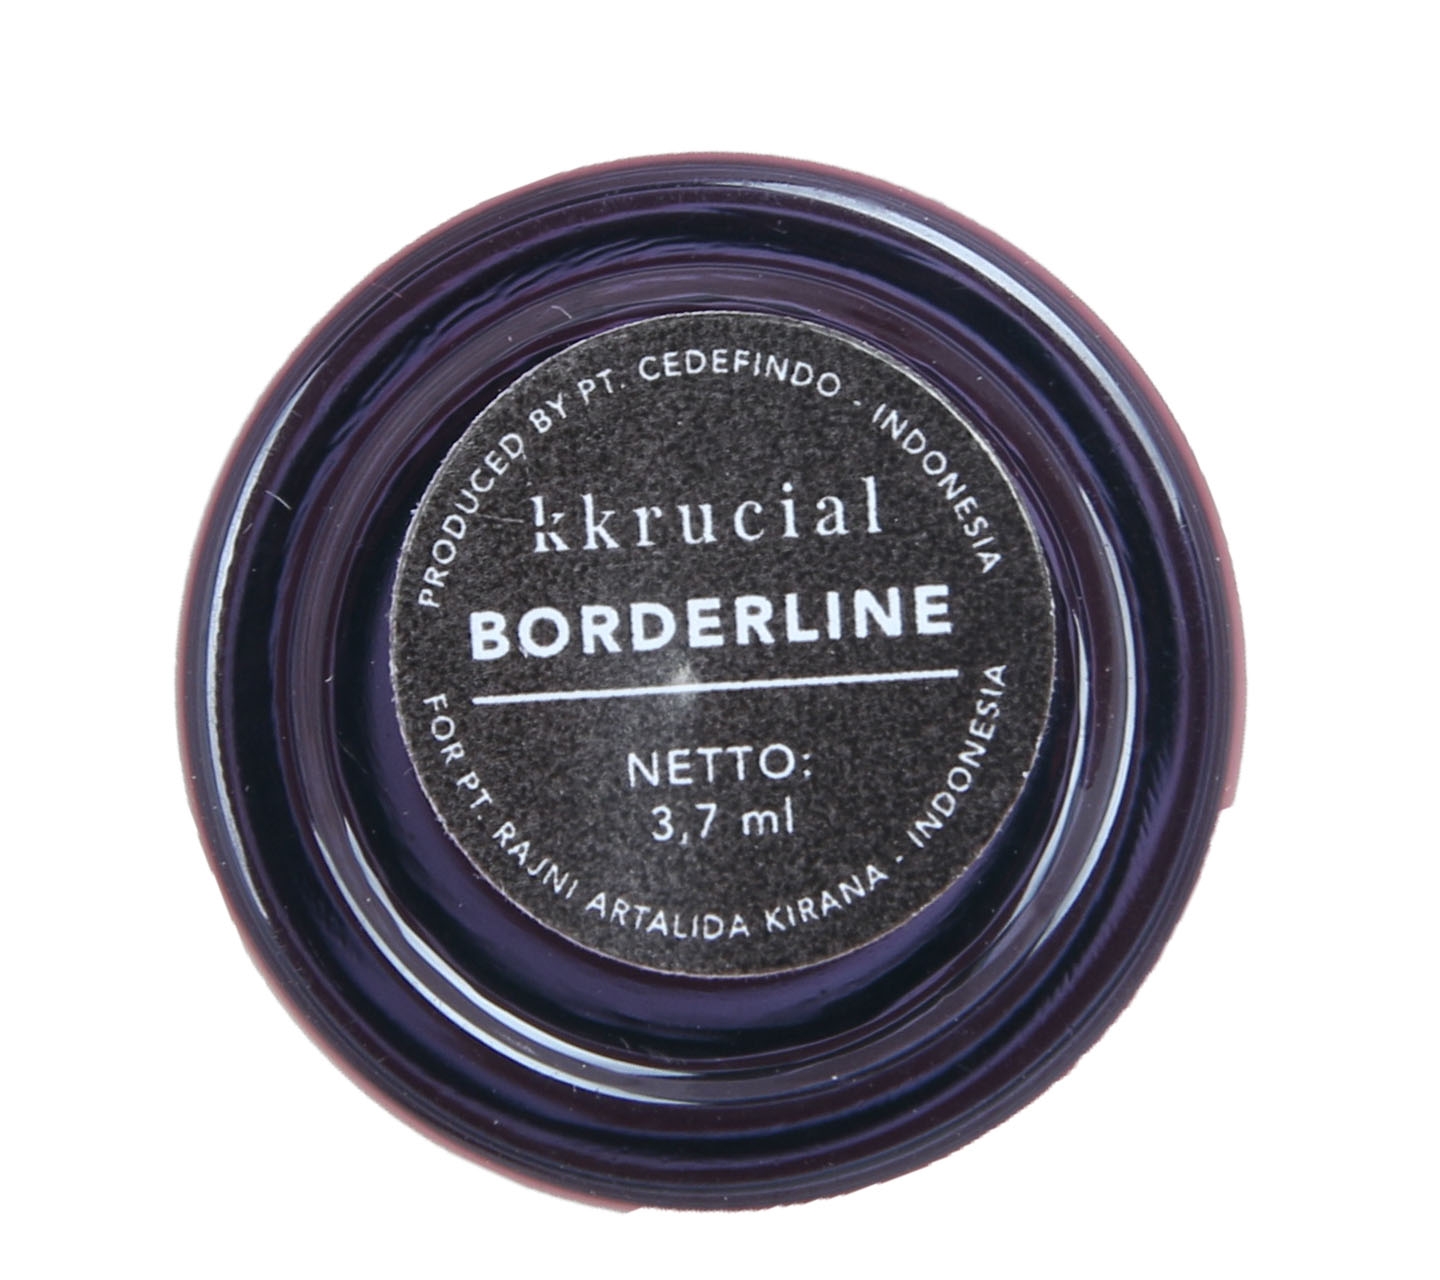 Kkrucial Borderline Matte Lip cream Lips